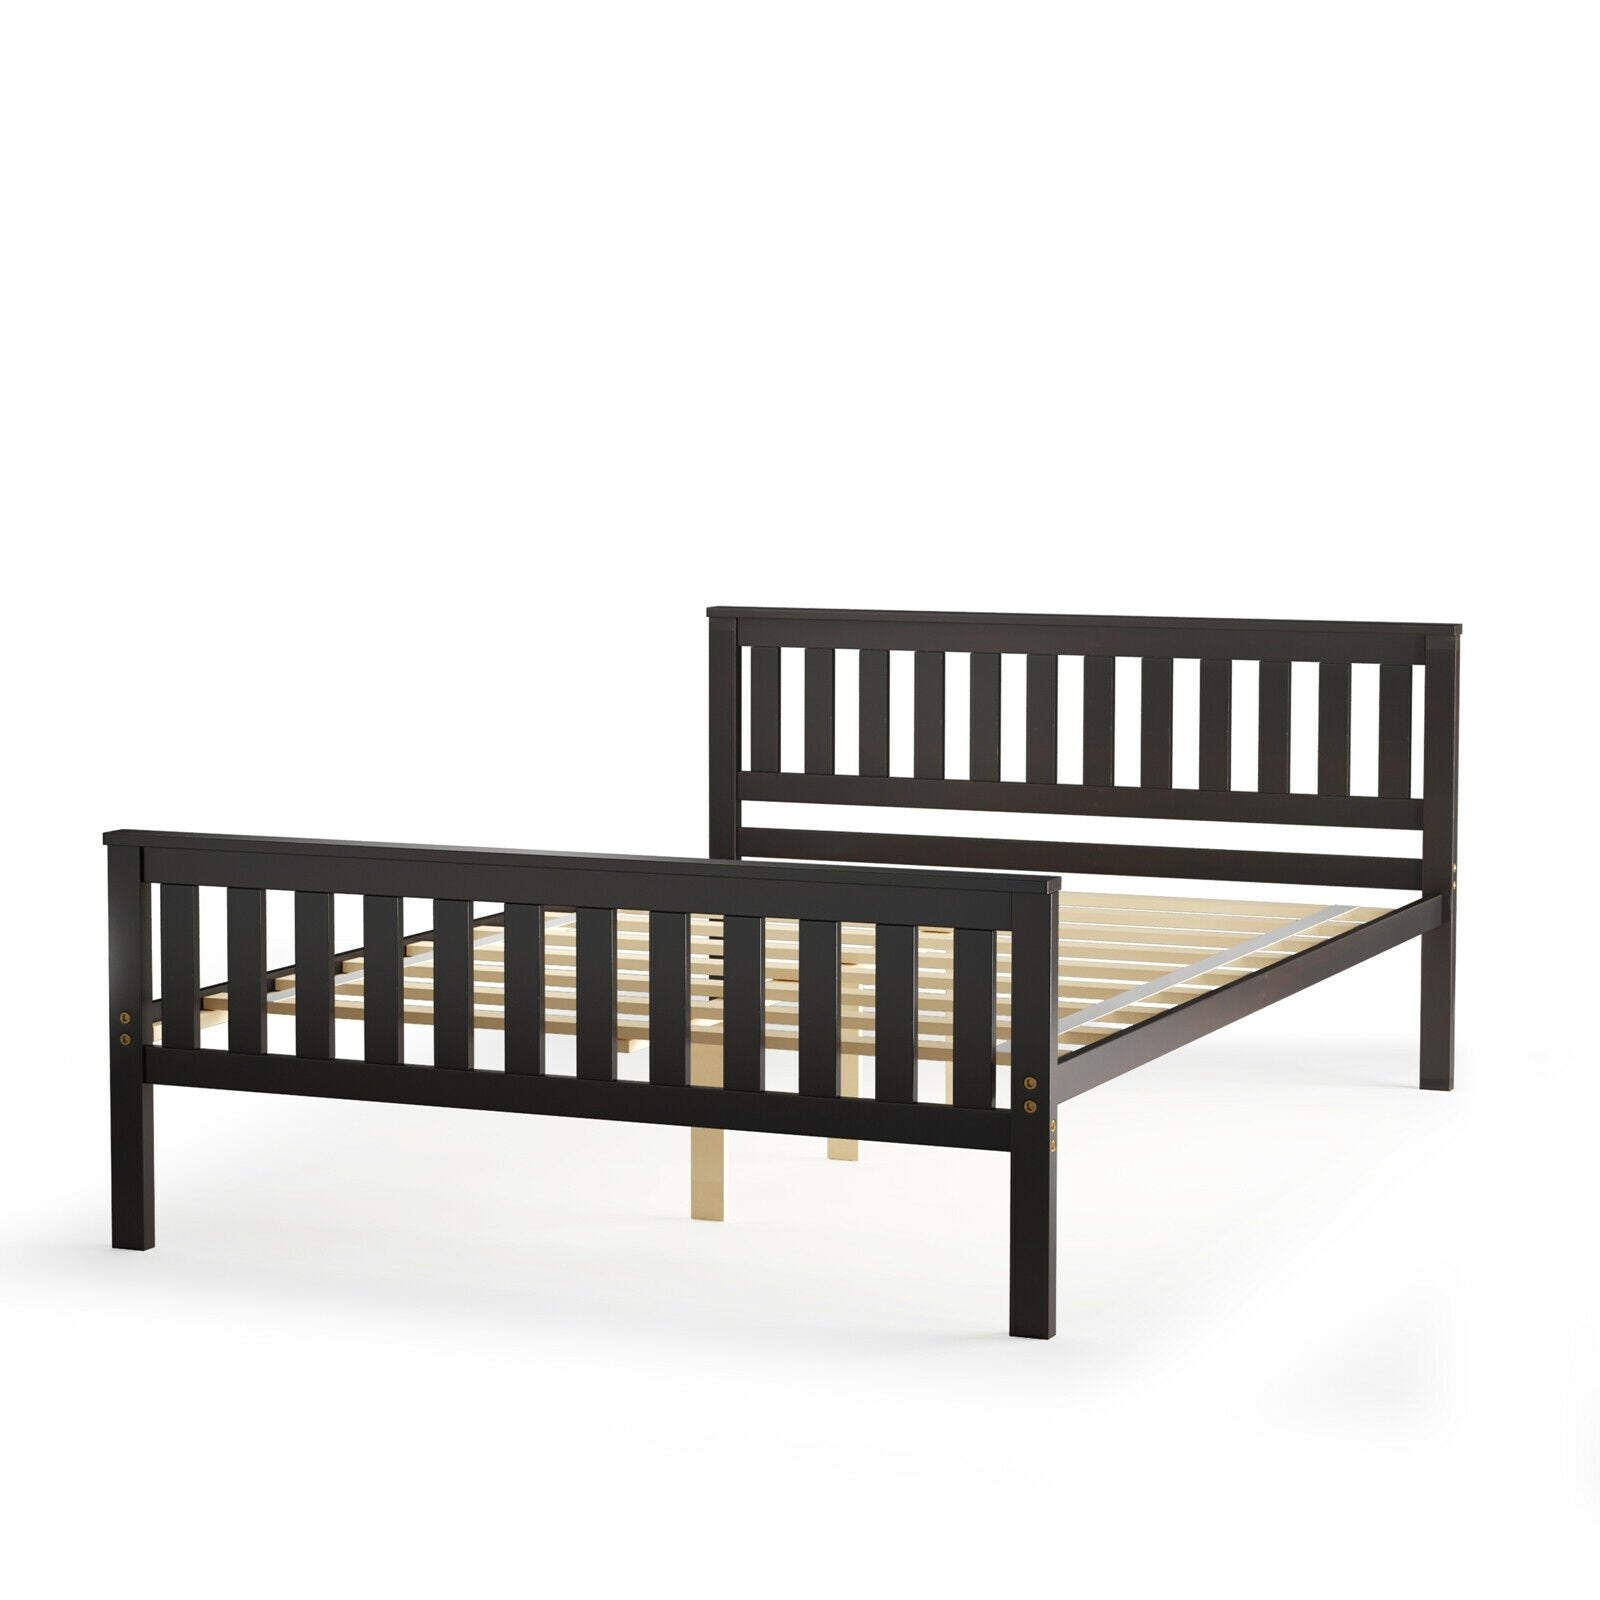 Full Size Wood Platform Bed with Headboard, Espresso - Gallery Canada